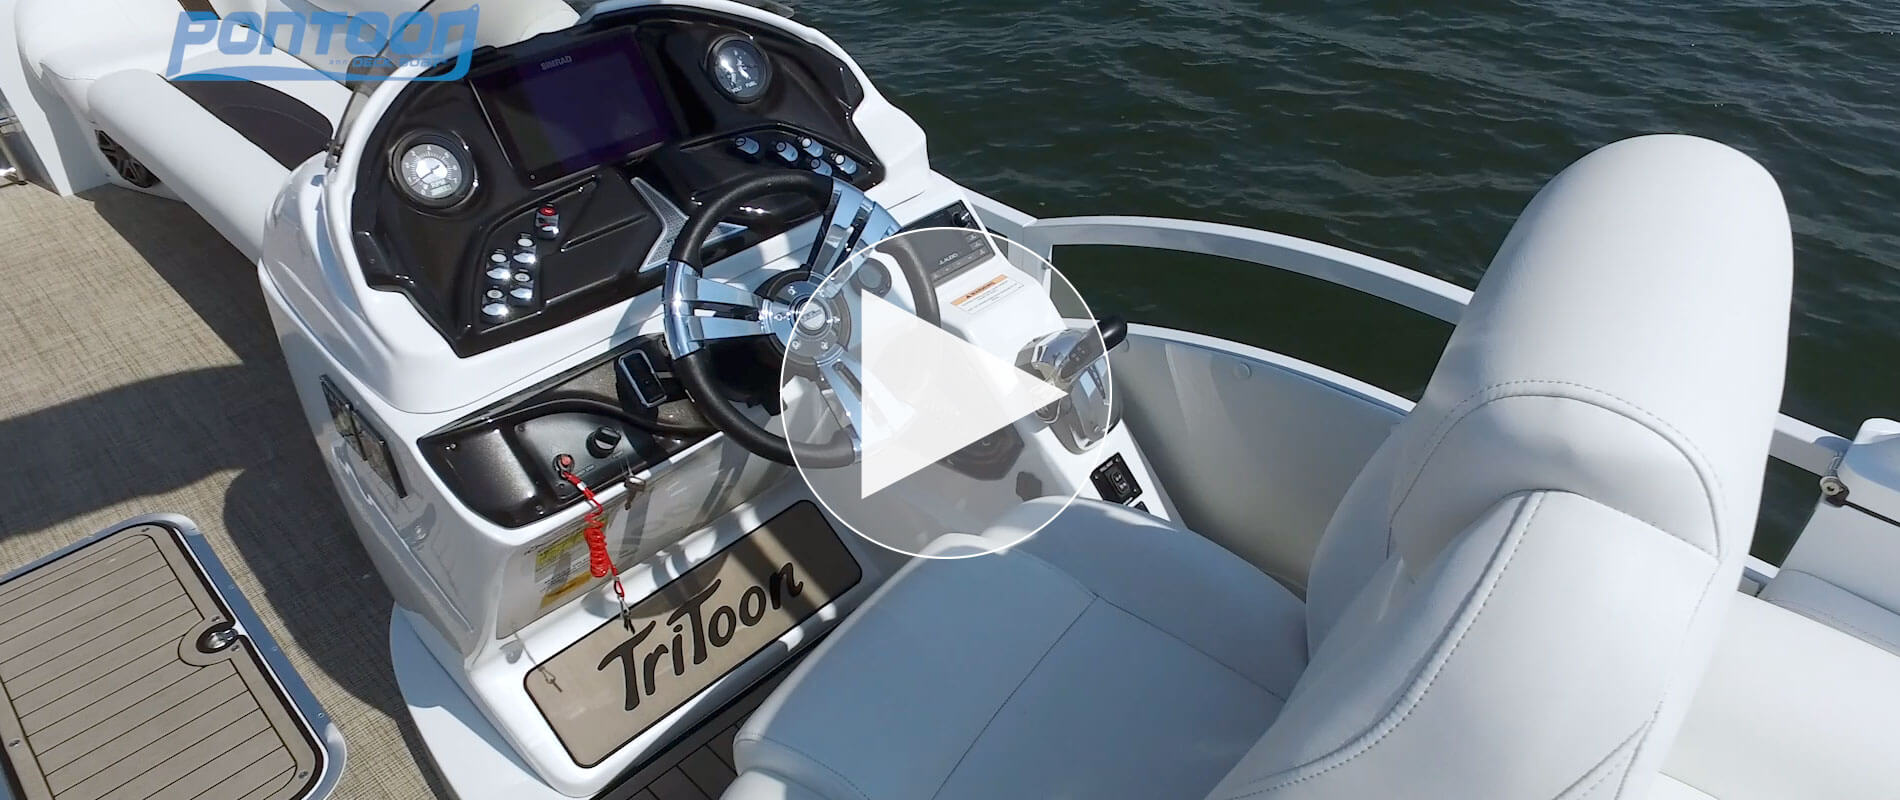 Pontoon & Deck Boat Magazine 2019 Shootout Video featuring the SportToon 26TT HTH